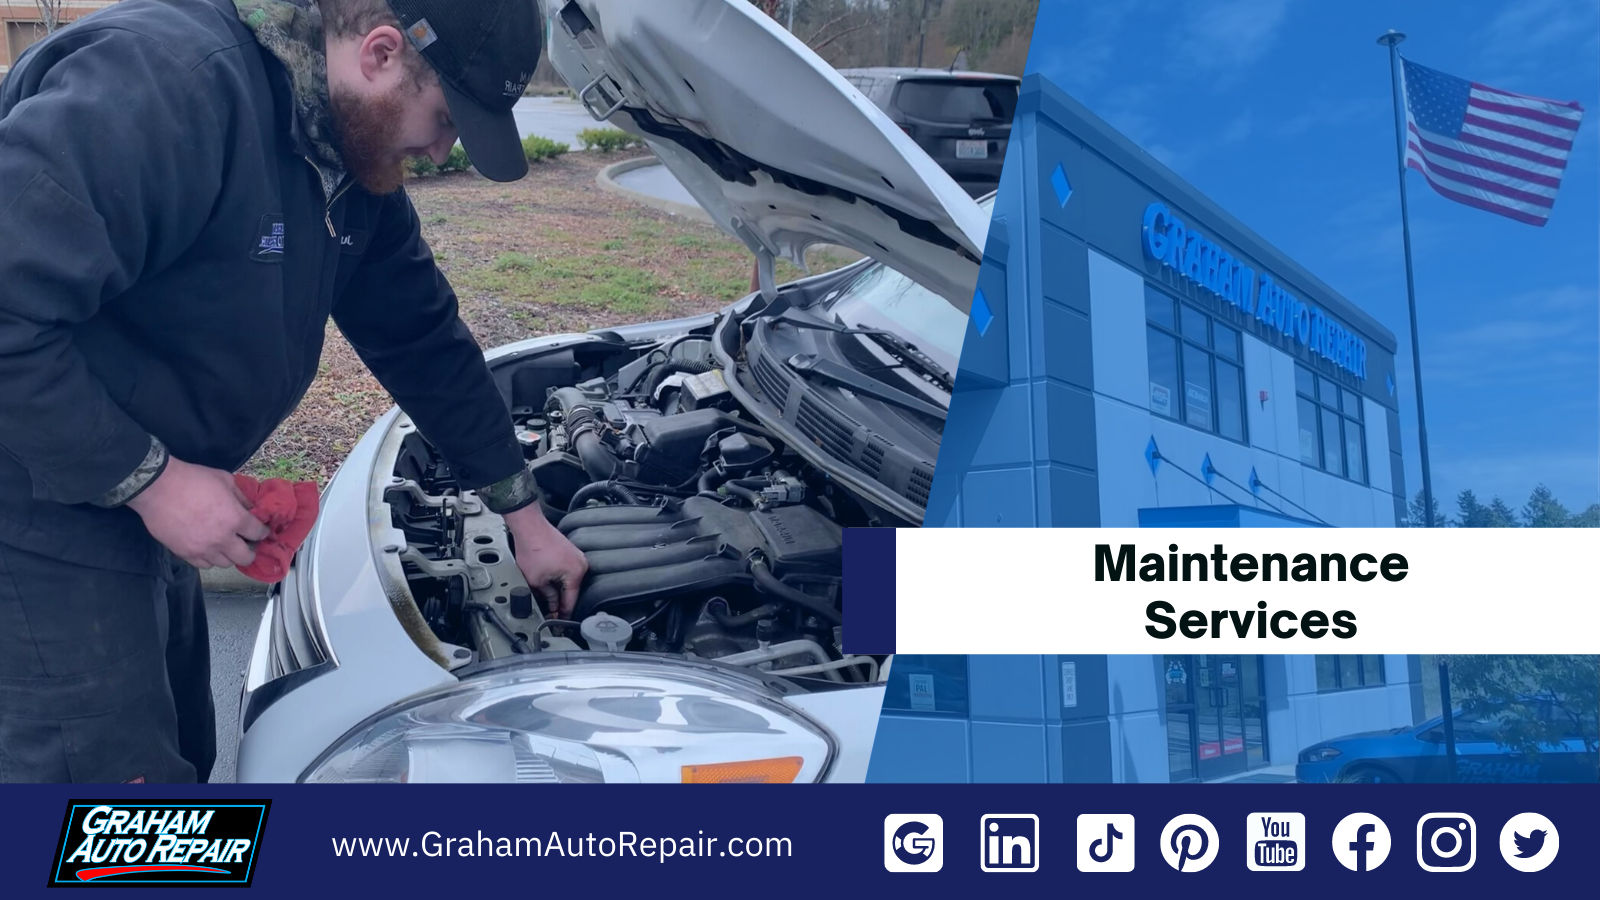 Regular Maintenance Services at Graham Auto Repair in Graham 98338 and Yelm 98597